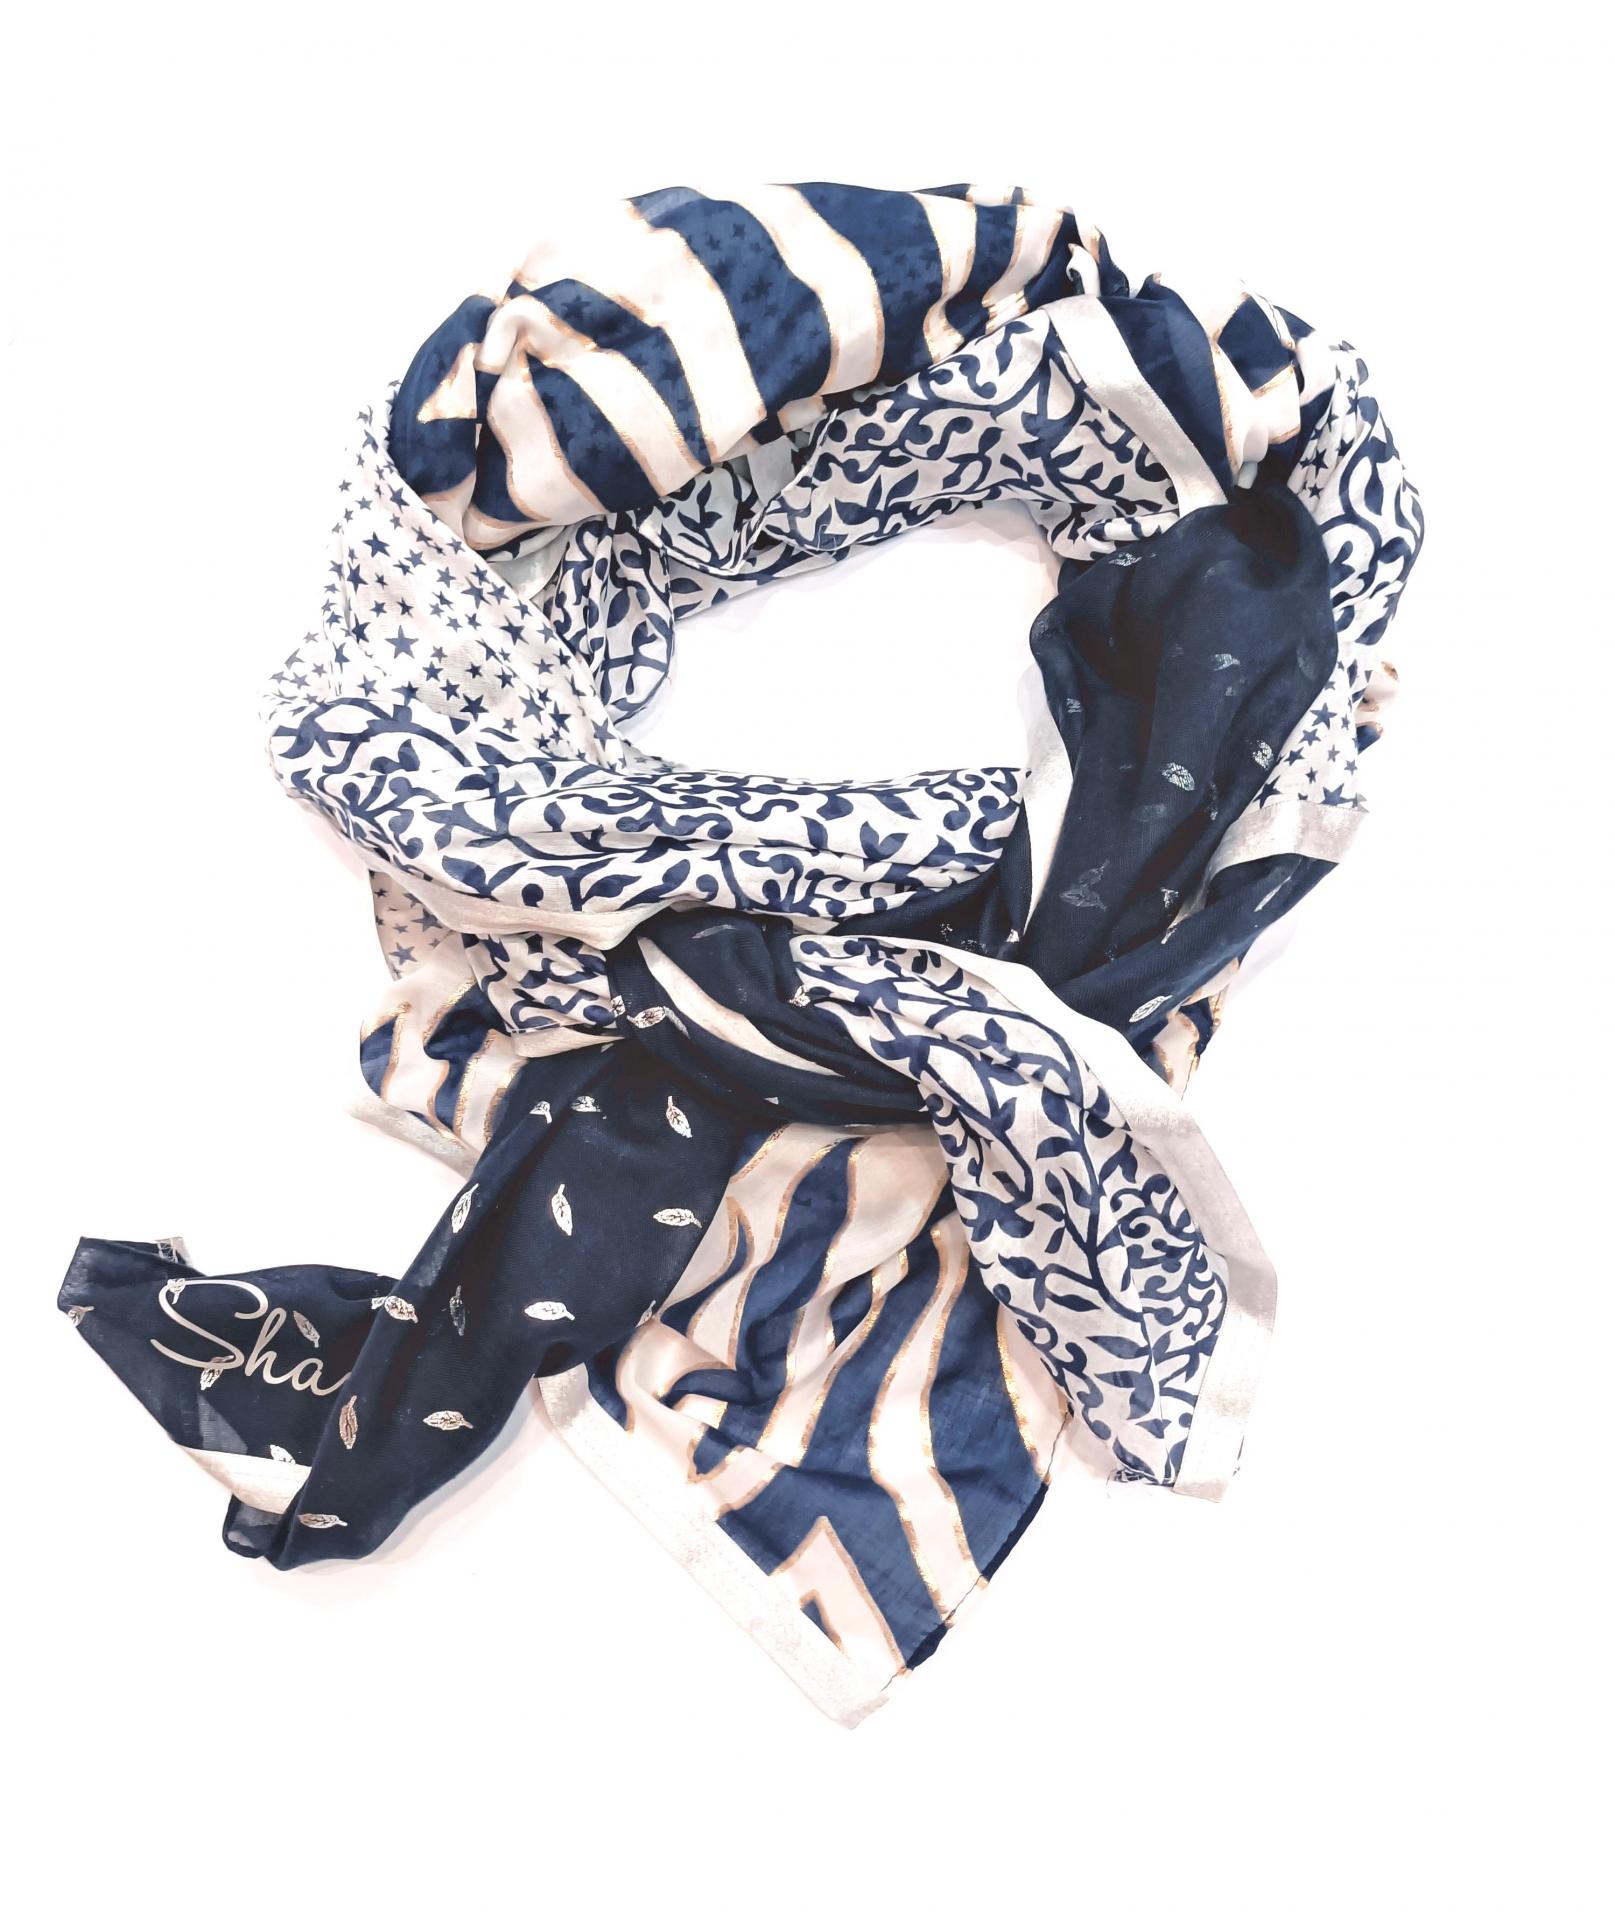 New foulard shanna marine blc